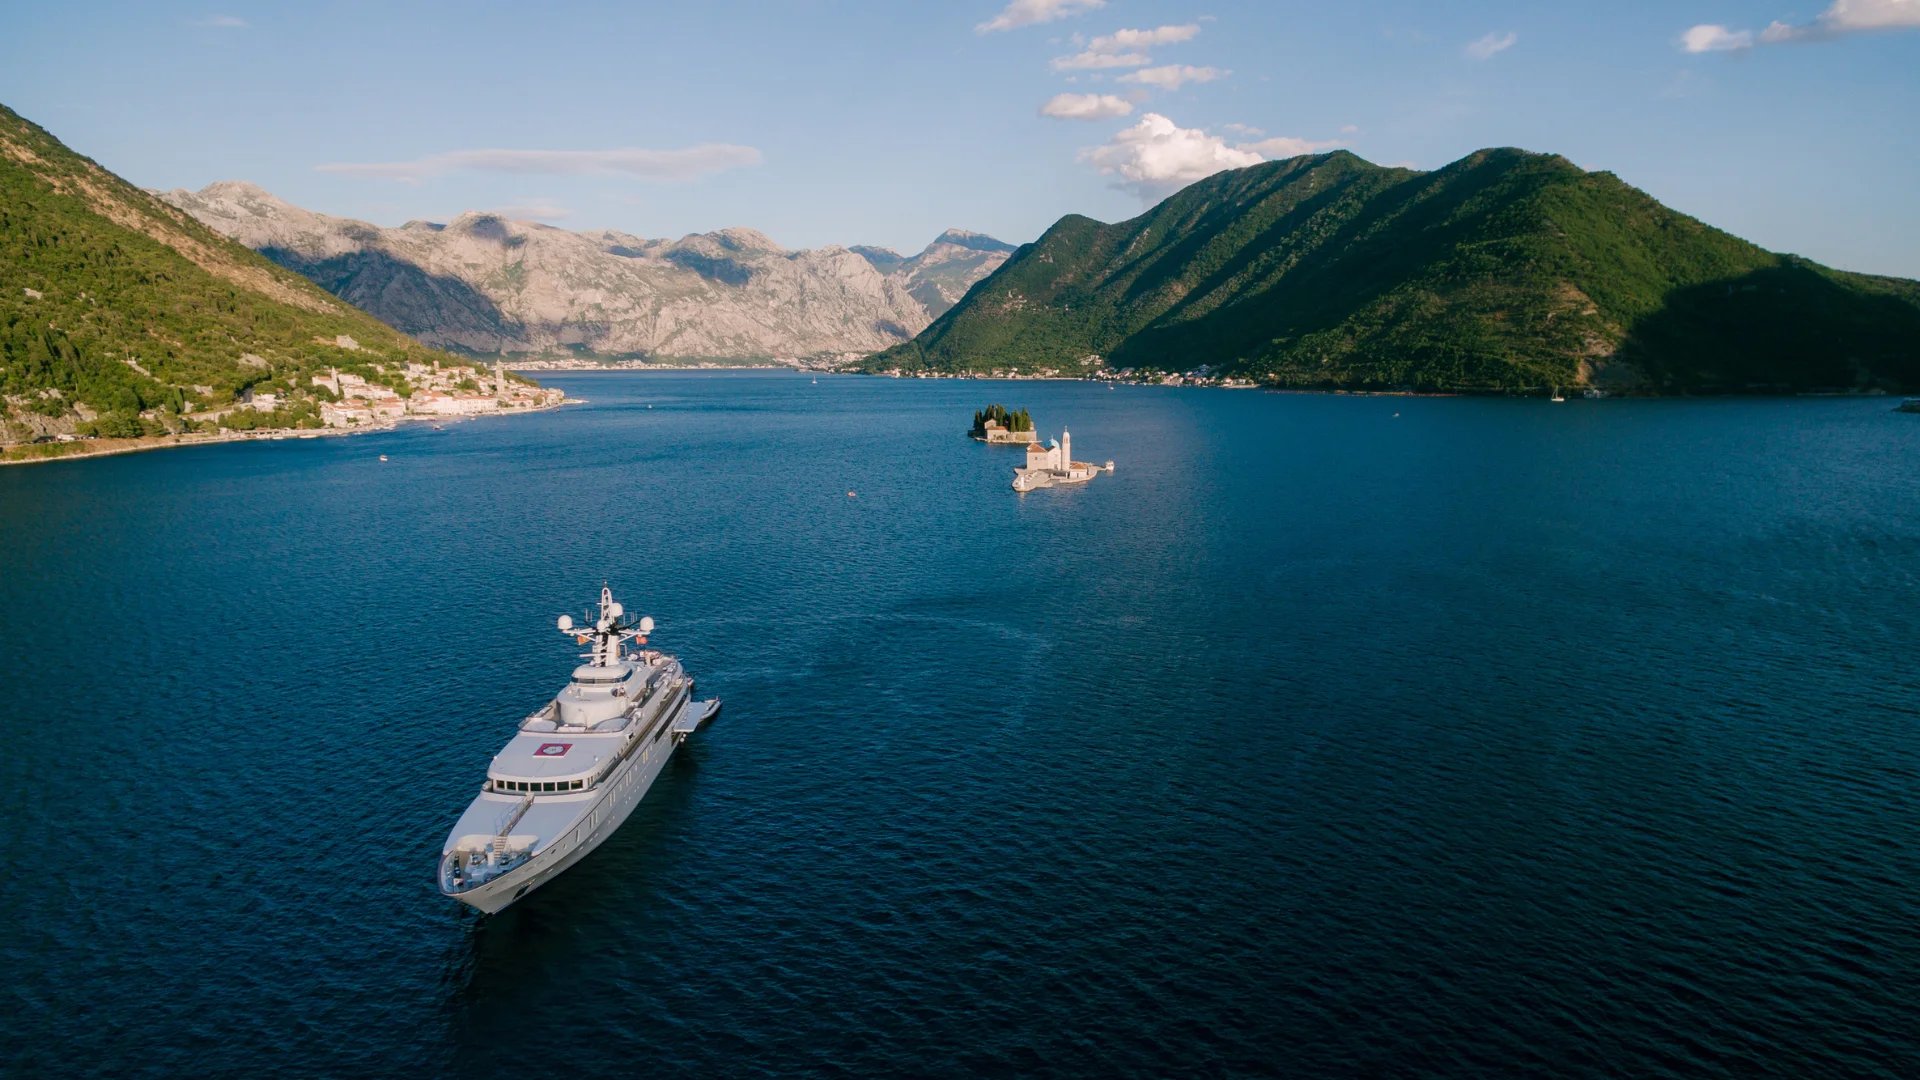 Sail the magnificent Bay of Kotor